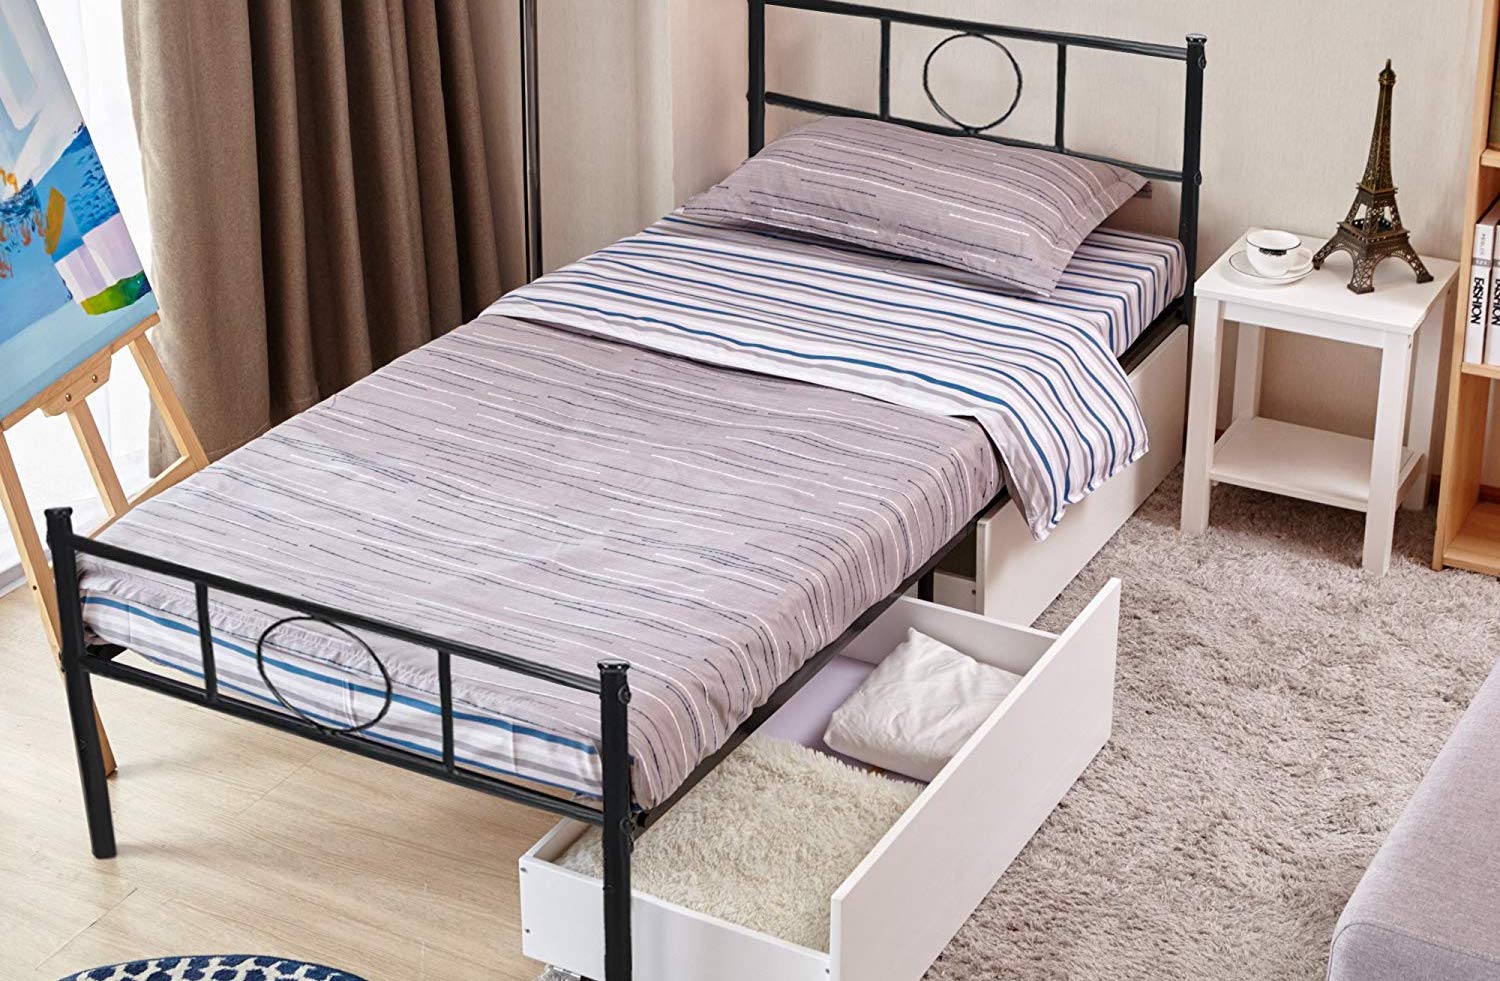 cheap bed frame and mattress sydney